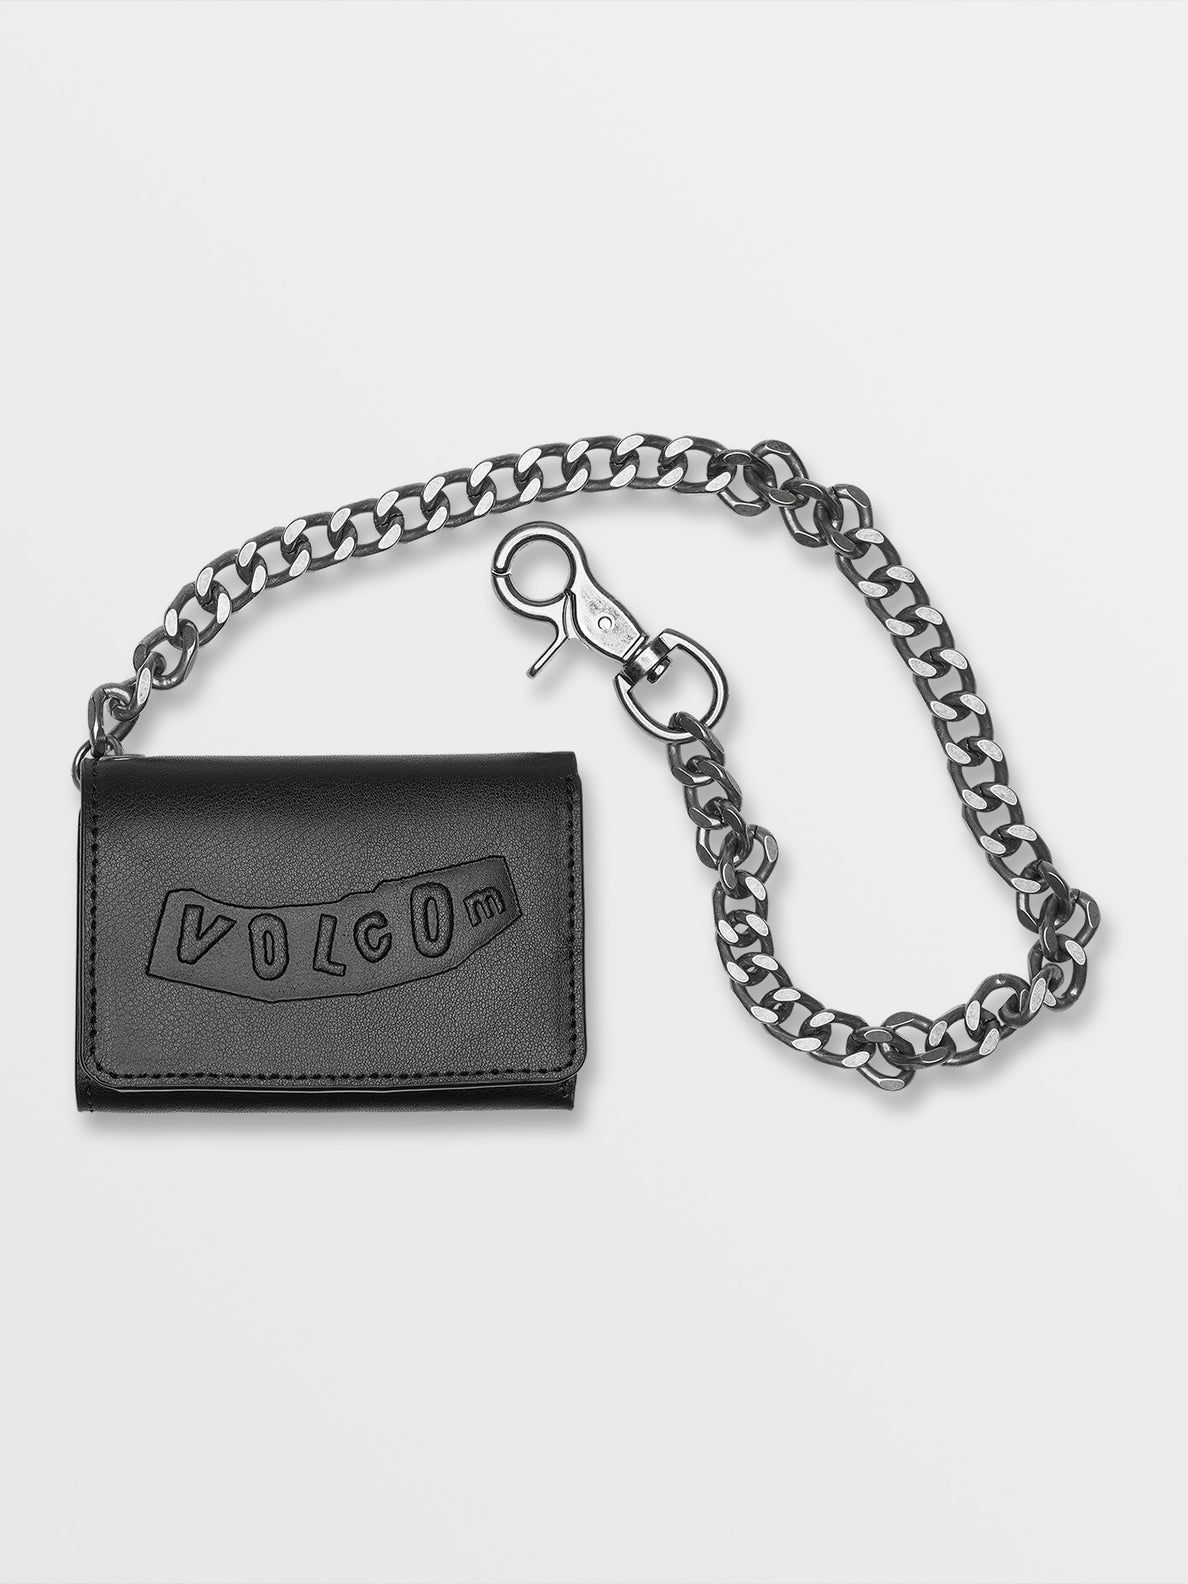 Pistol Leather Wallet - Black